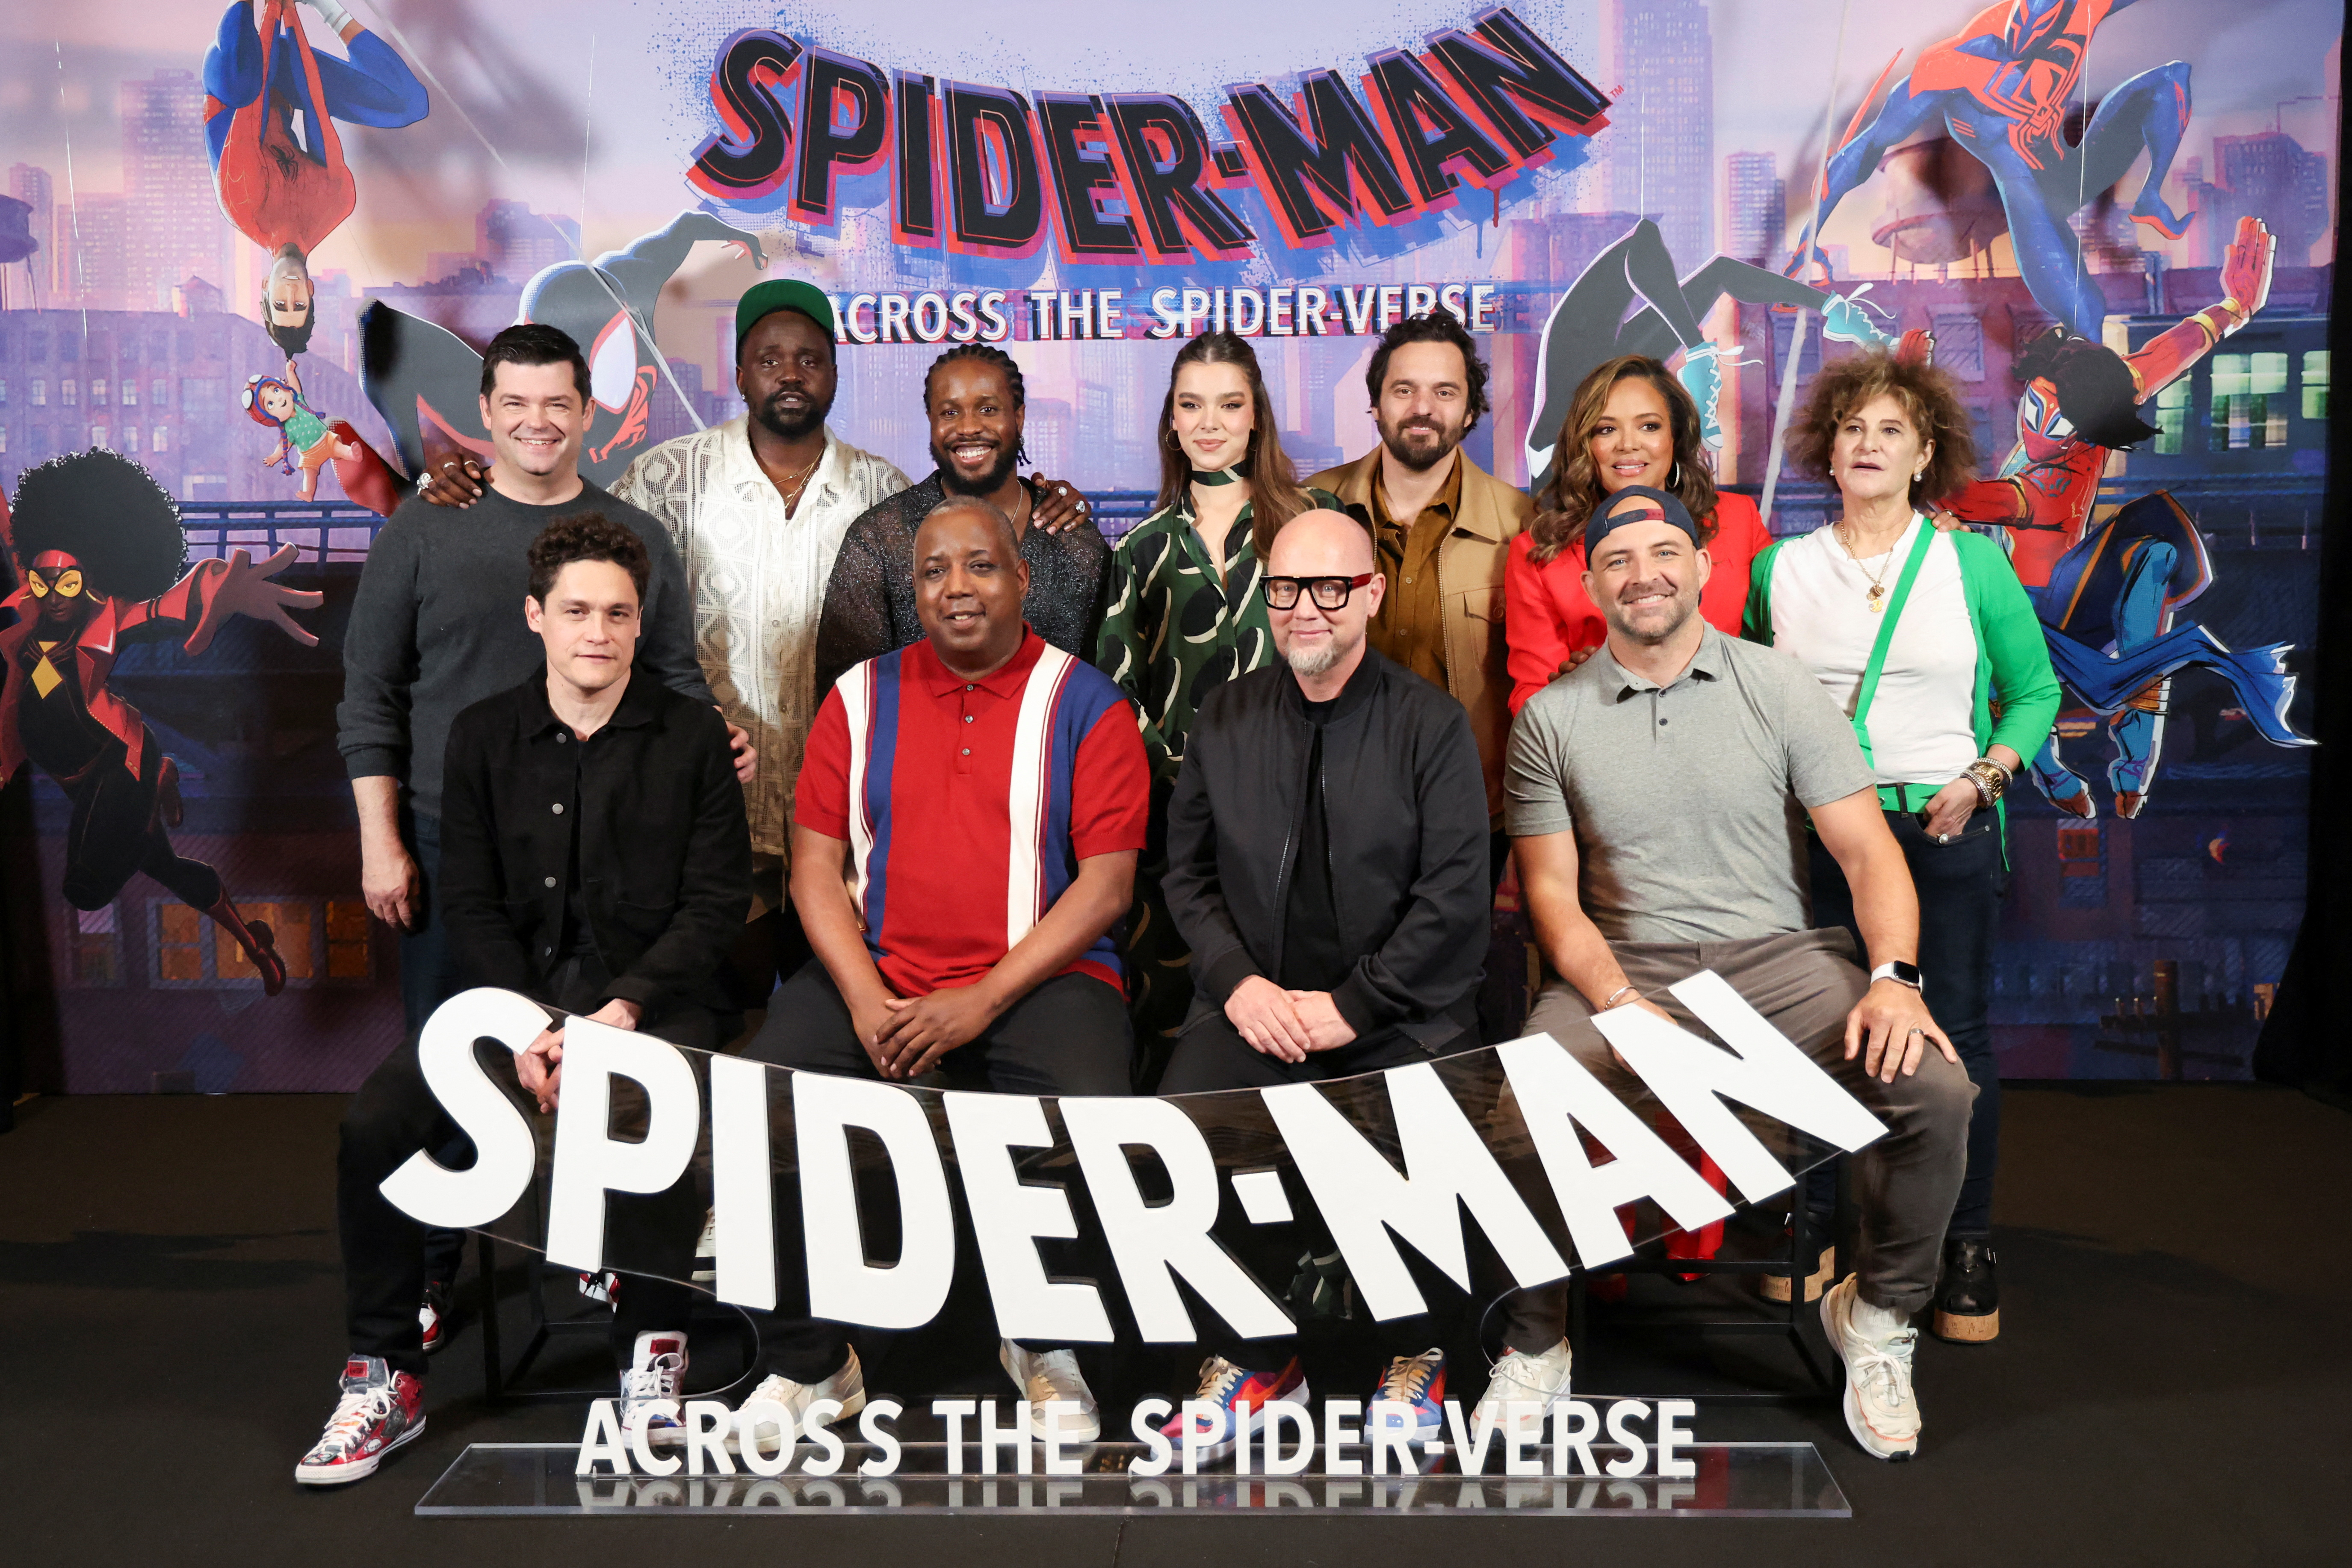 New Spider-Man film will not screen in UAE, as region debates ...